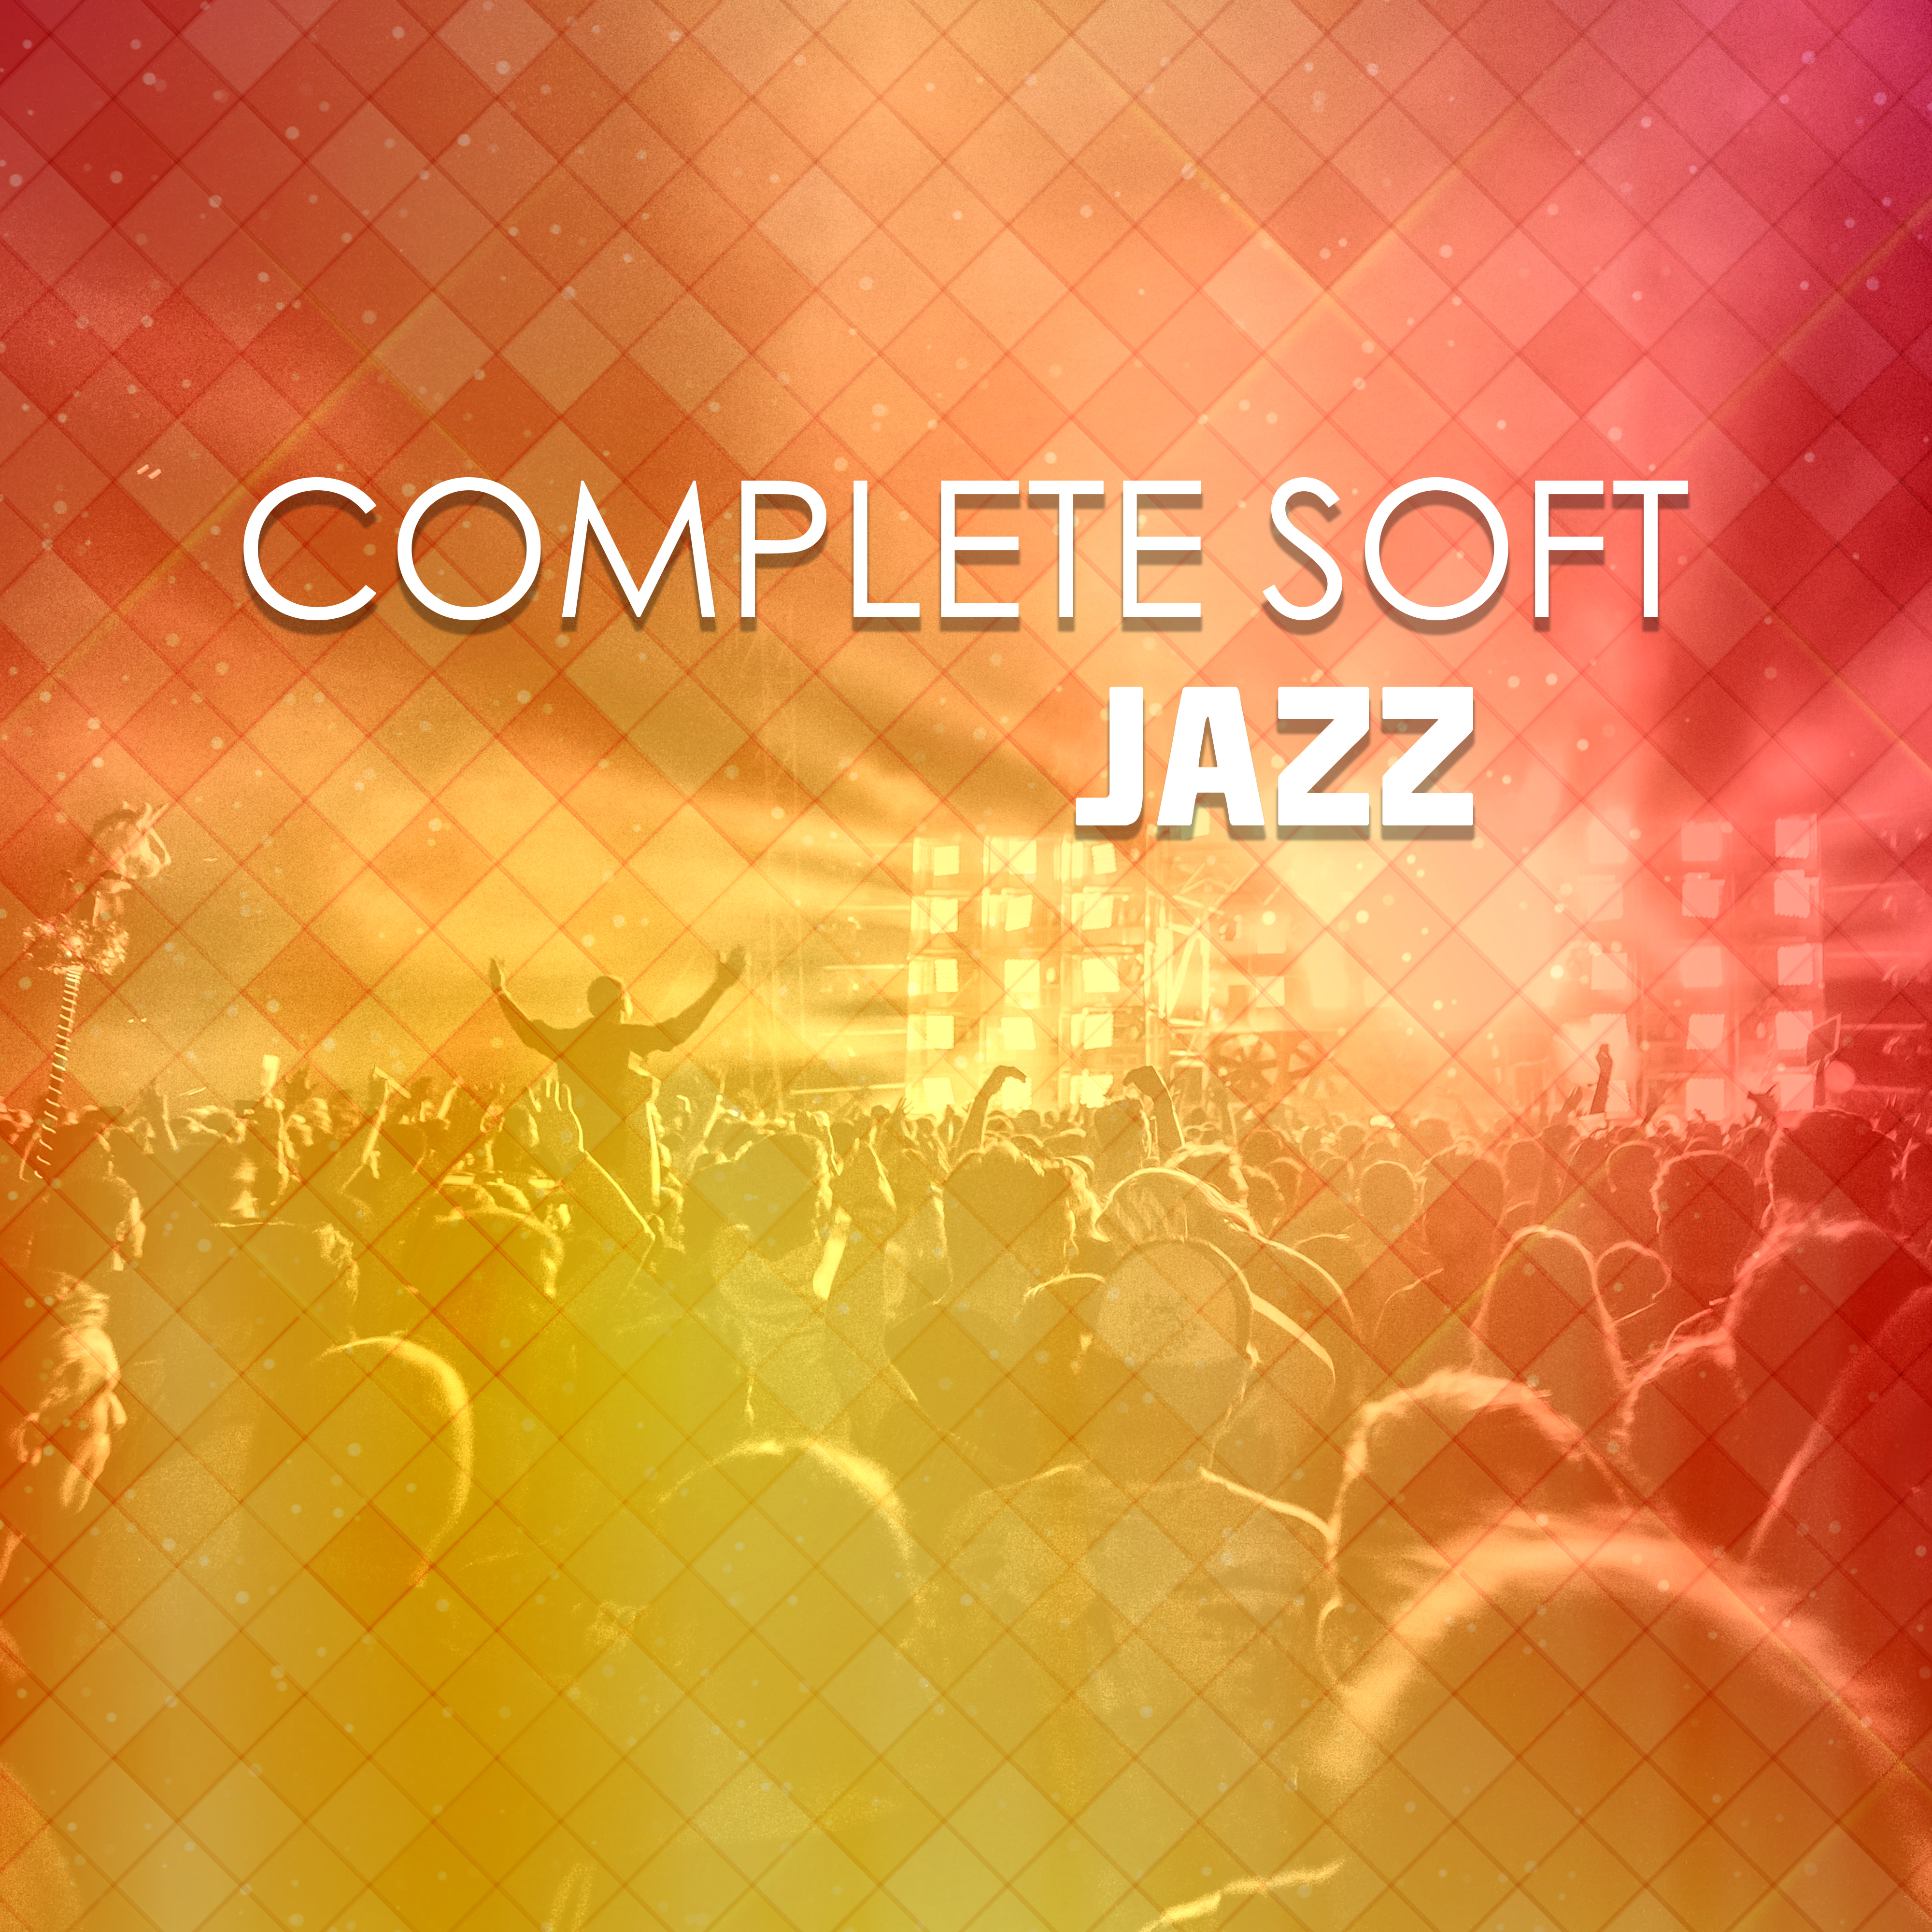 Complete Soft Jazz